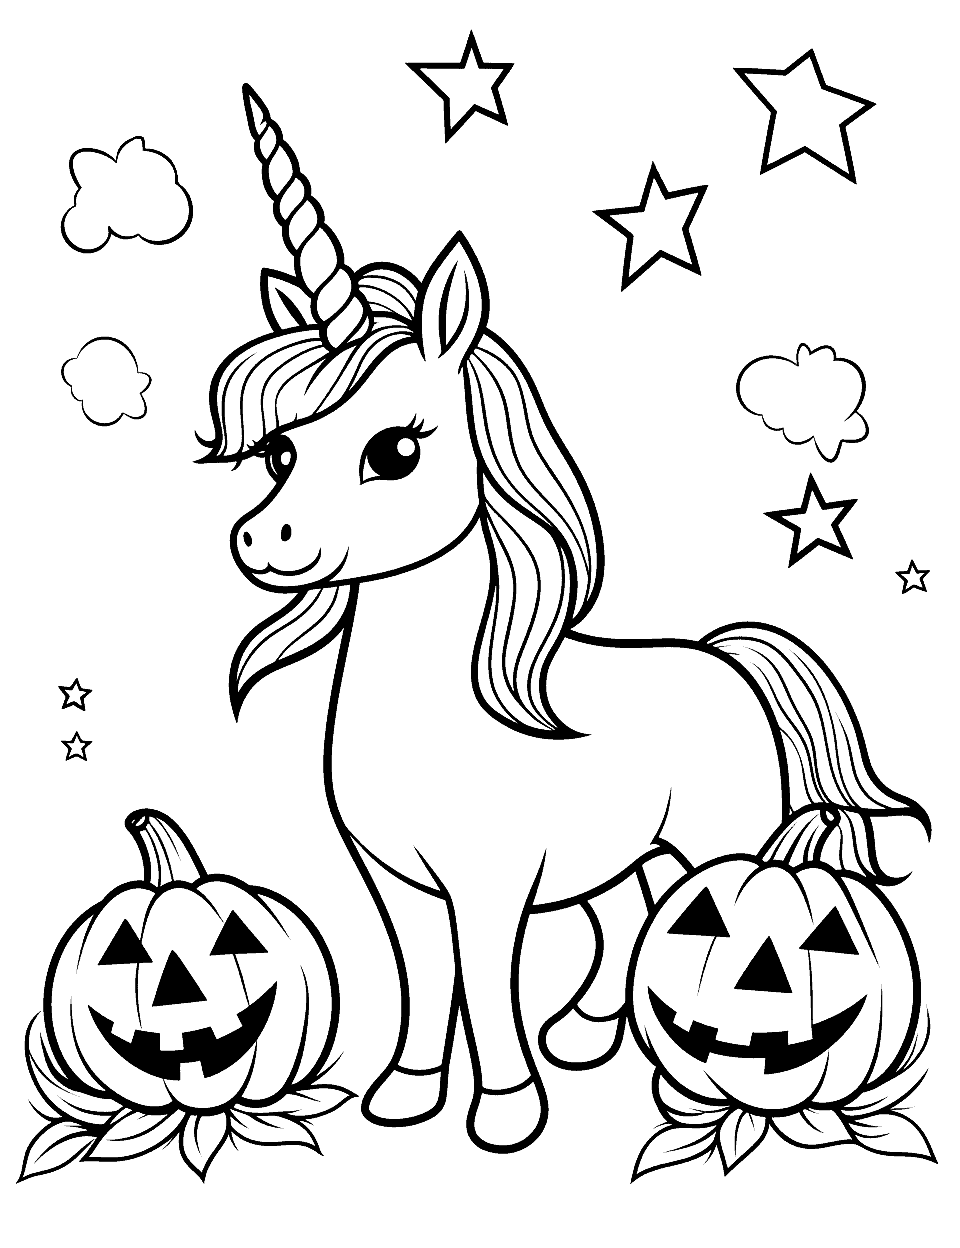 Unicorn and Jack 'O Lantern Coloring Page - A Halloween-themed coloring page featuring a unicorn with a pile of Jack ‘O Lanterns.